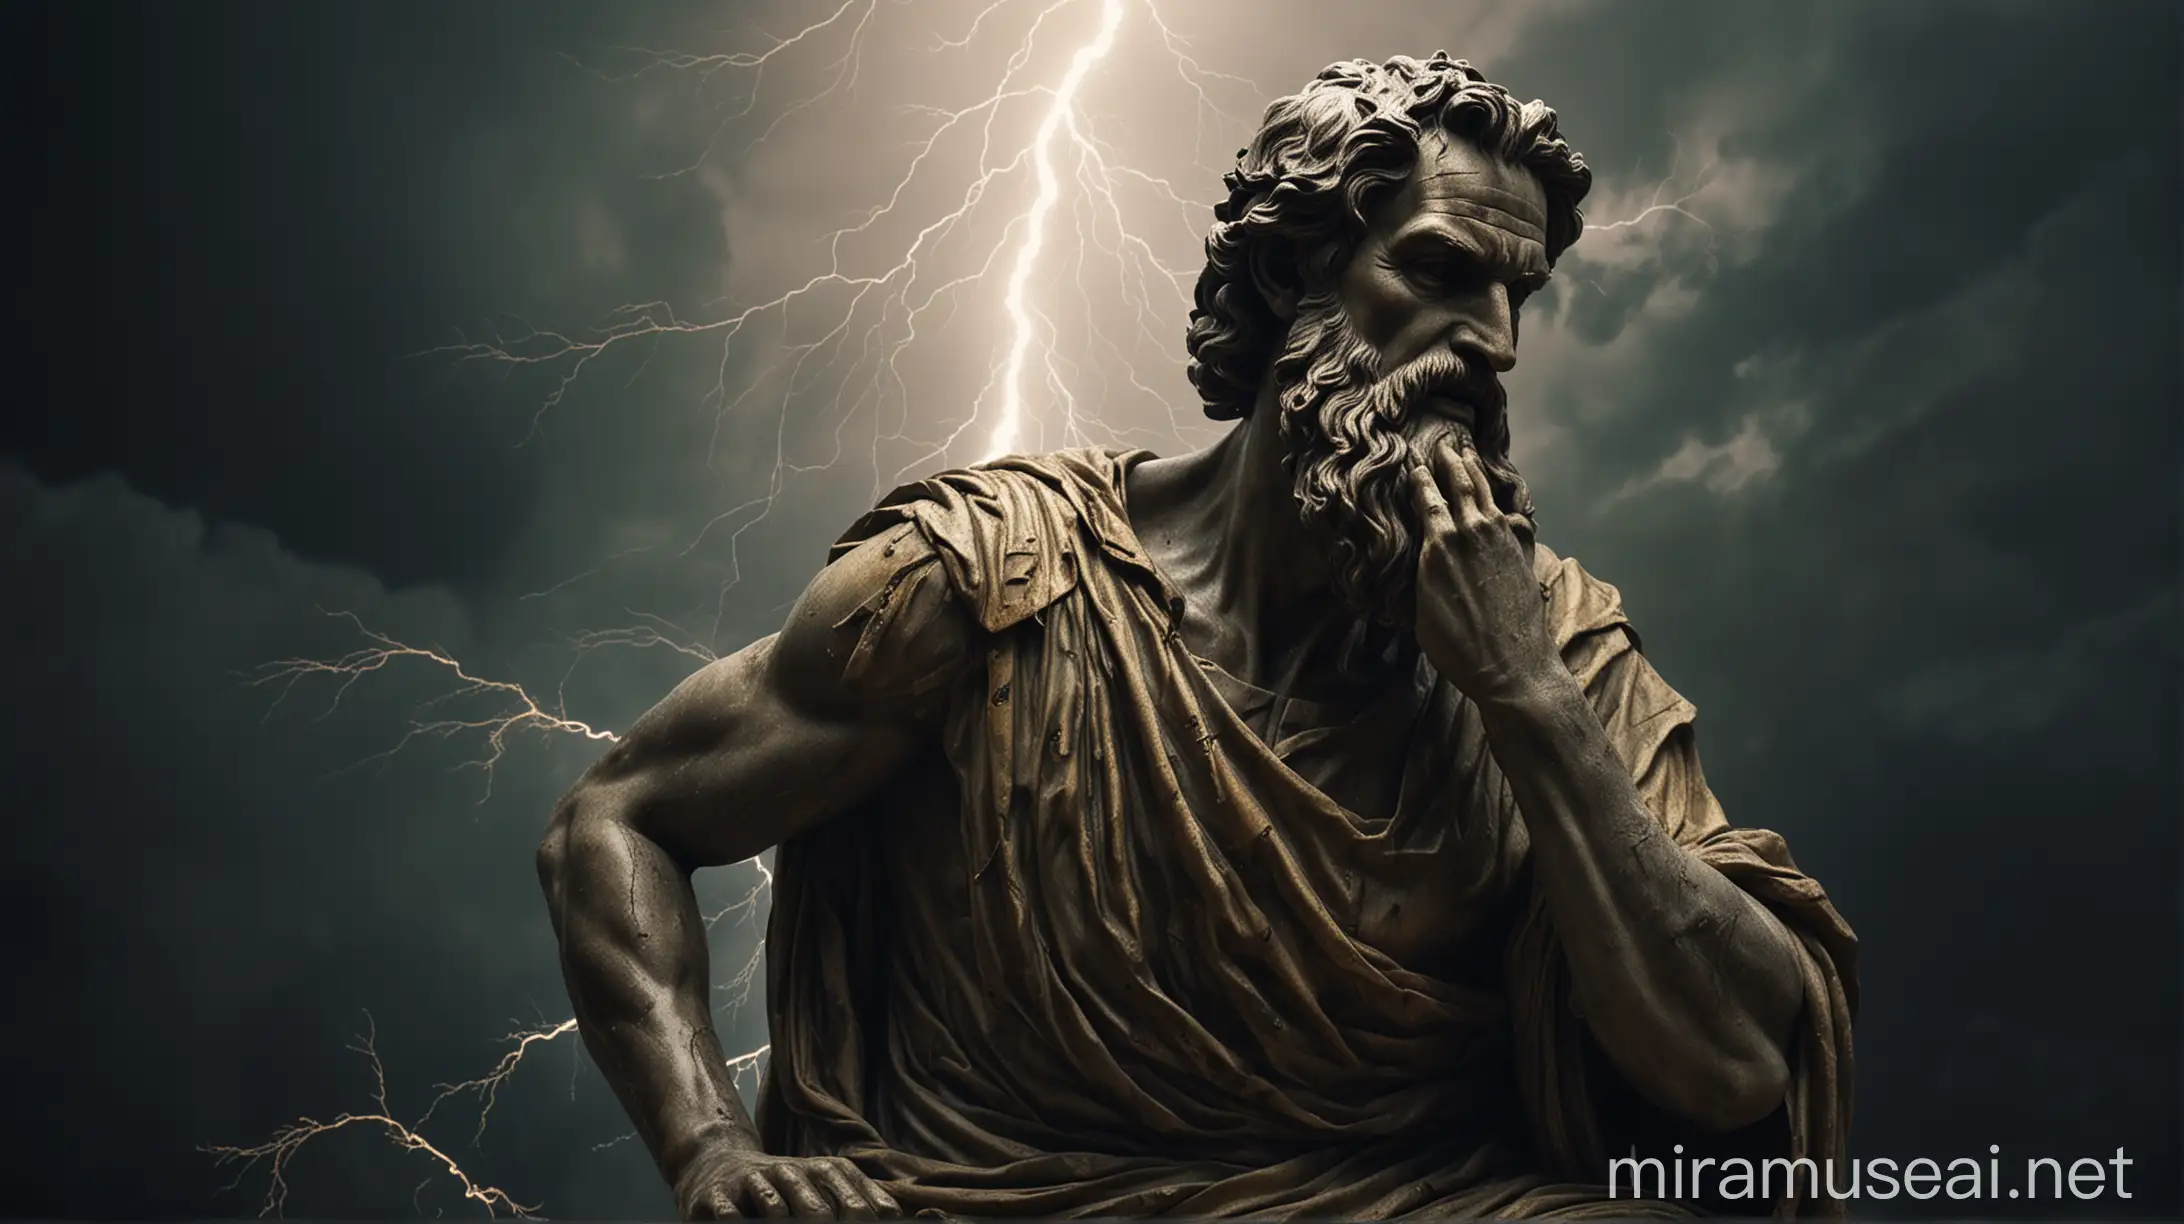 Ancient Greek Statue of Epictetus with Dramatic Lightning Backdrop